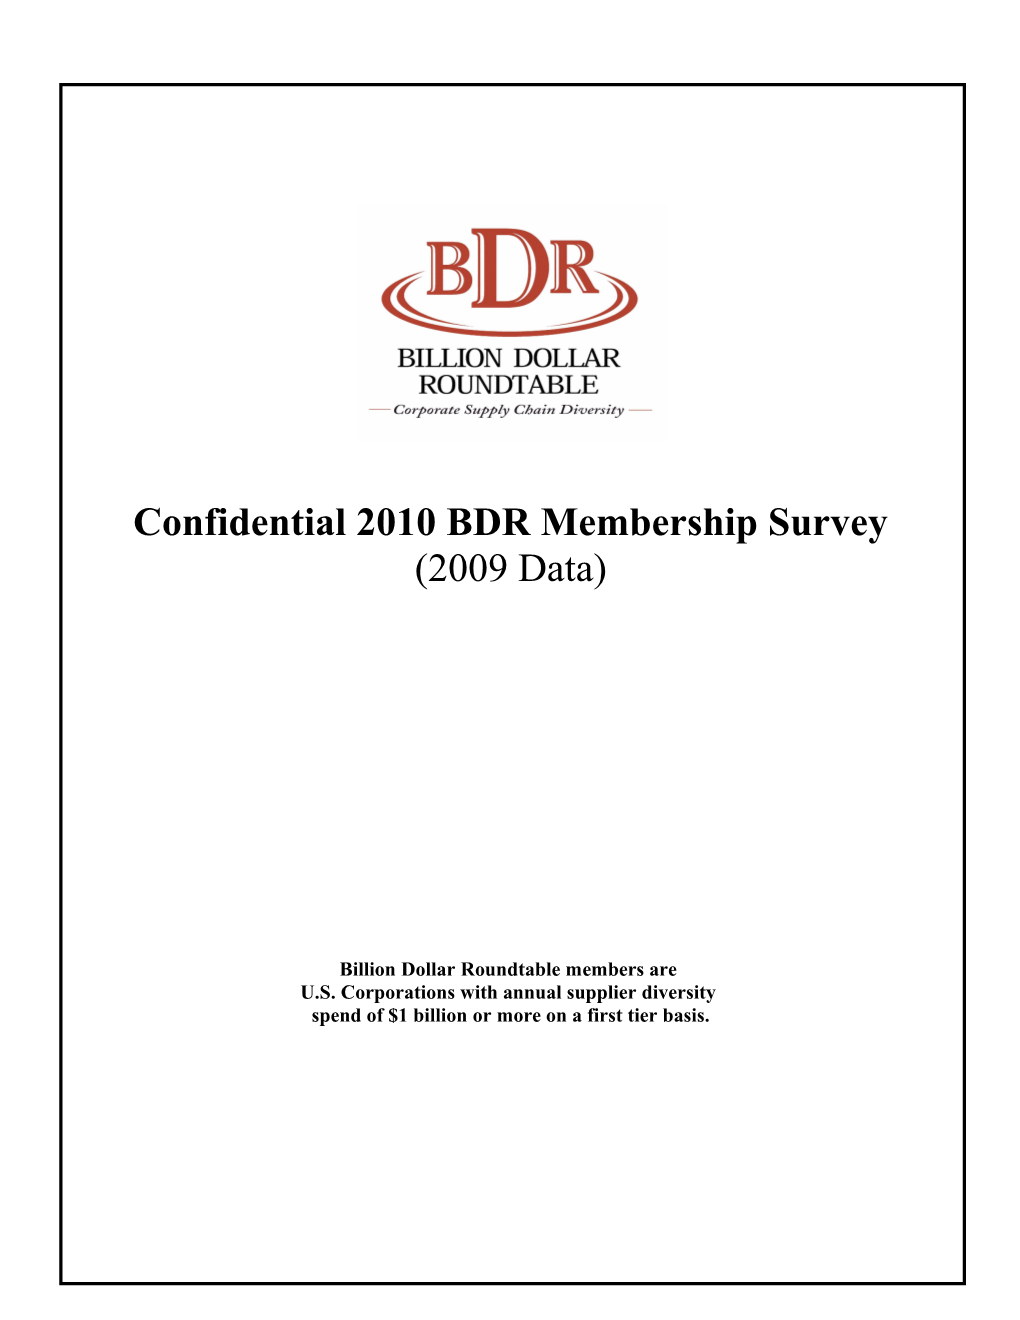 Confidential 2010 BDR Membership Survey